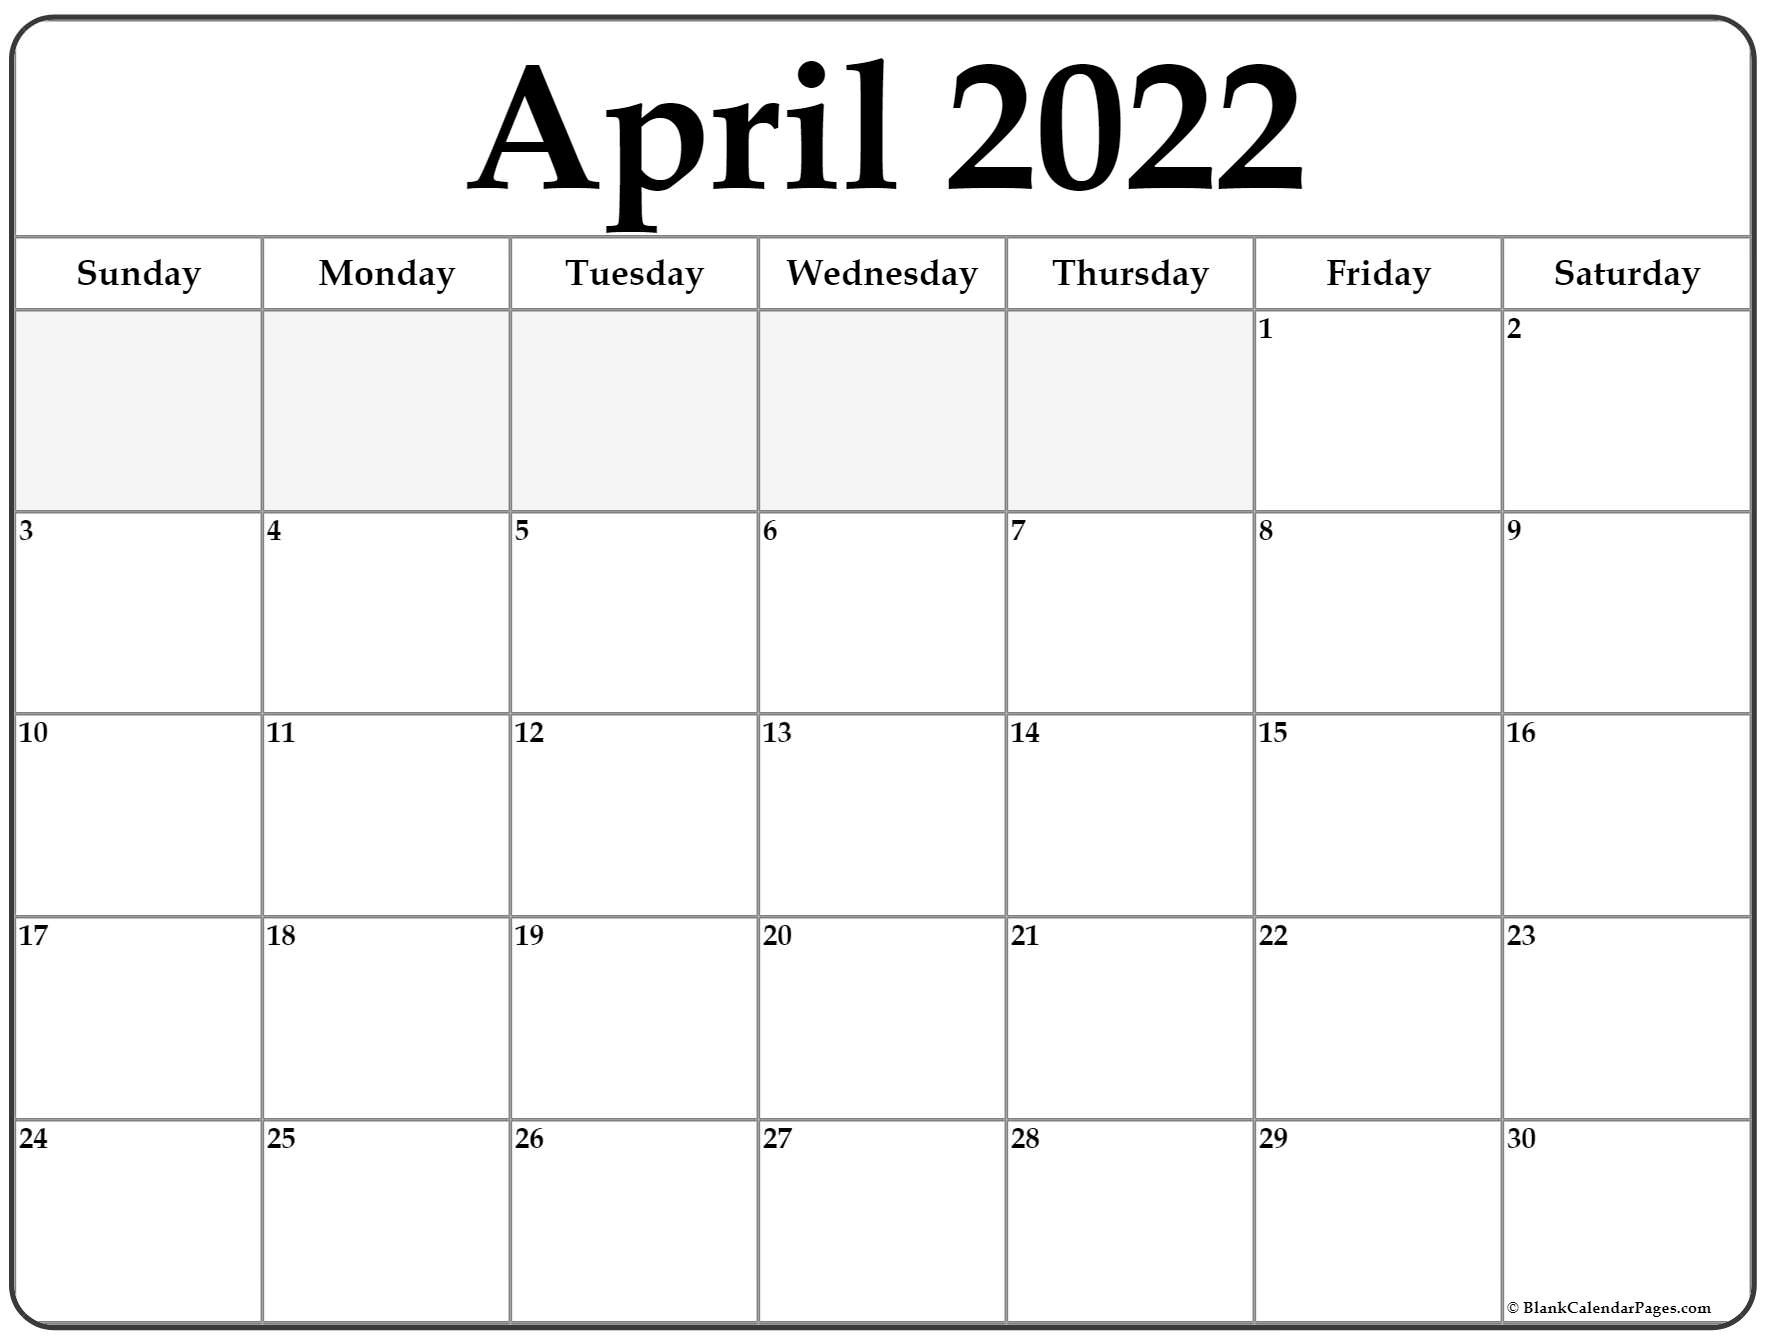 April 2022 Calendar | Free Printable Calendar Templates  Calendar For April 2022 With Holidays